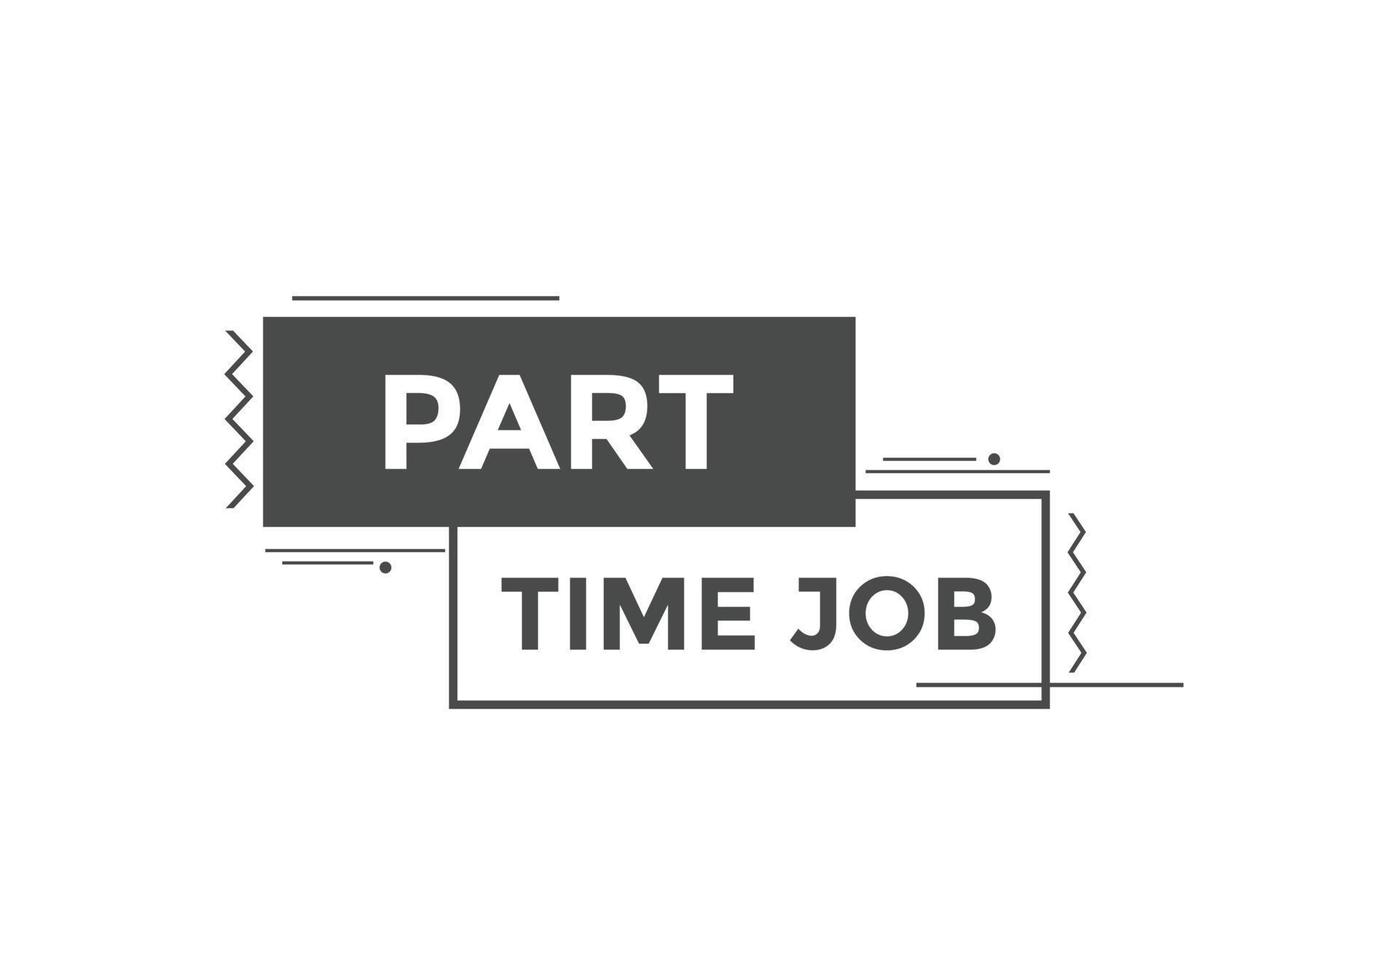 Part time job text button. Part time job sign speech bubble. Web banner label template. Vector Illustration